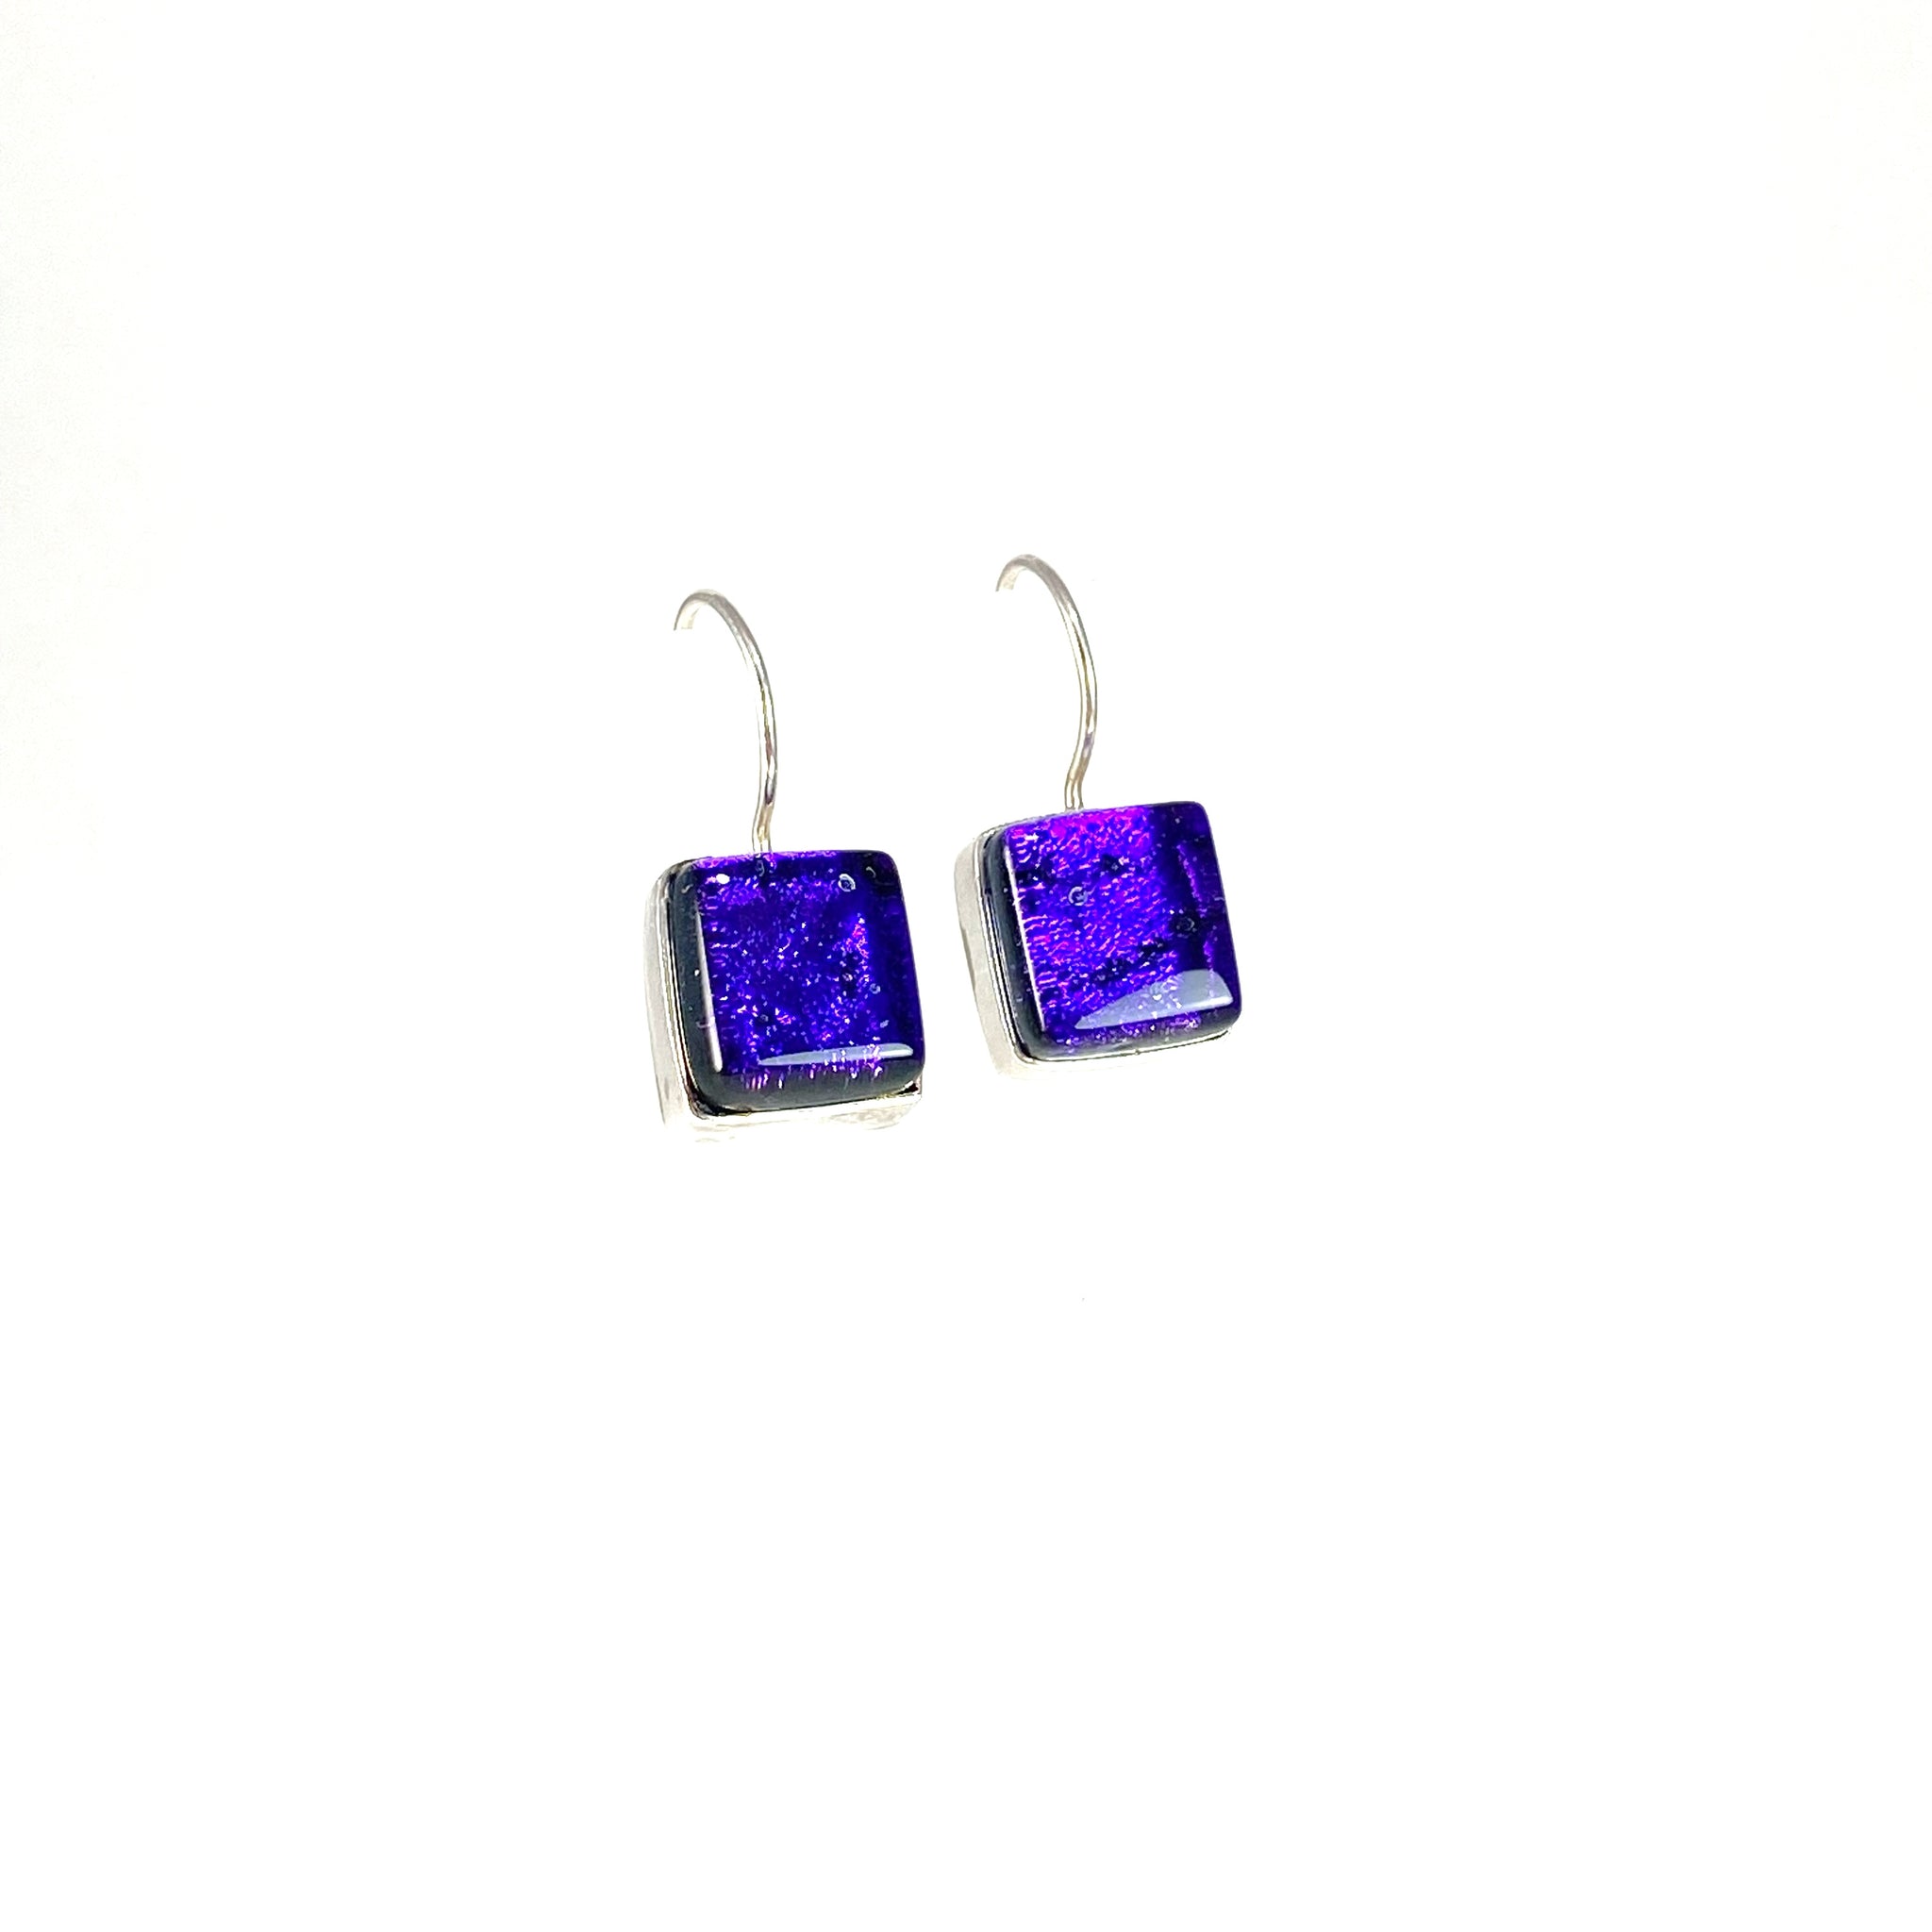 Square Earrings in Grape